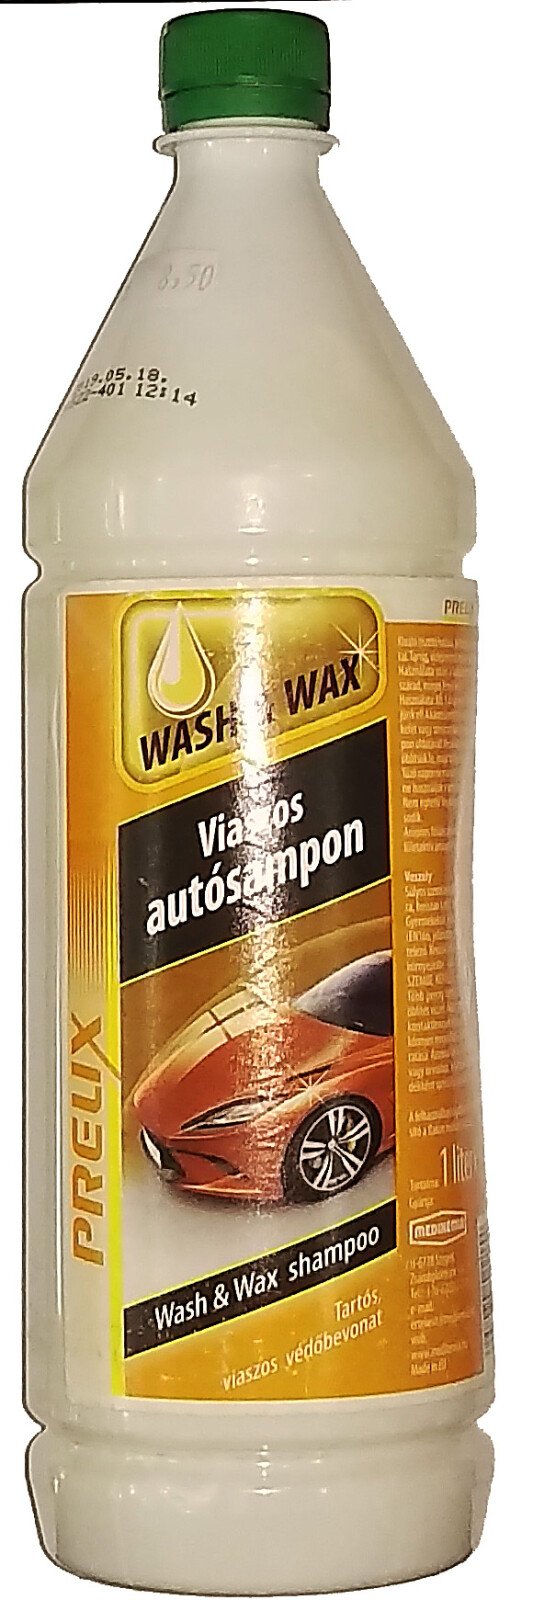 Prelix Wash & Wax viaszos sampon - 1 liter thumb